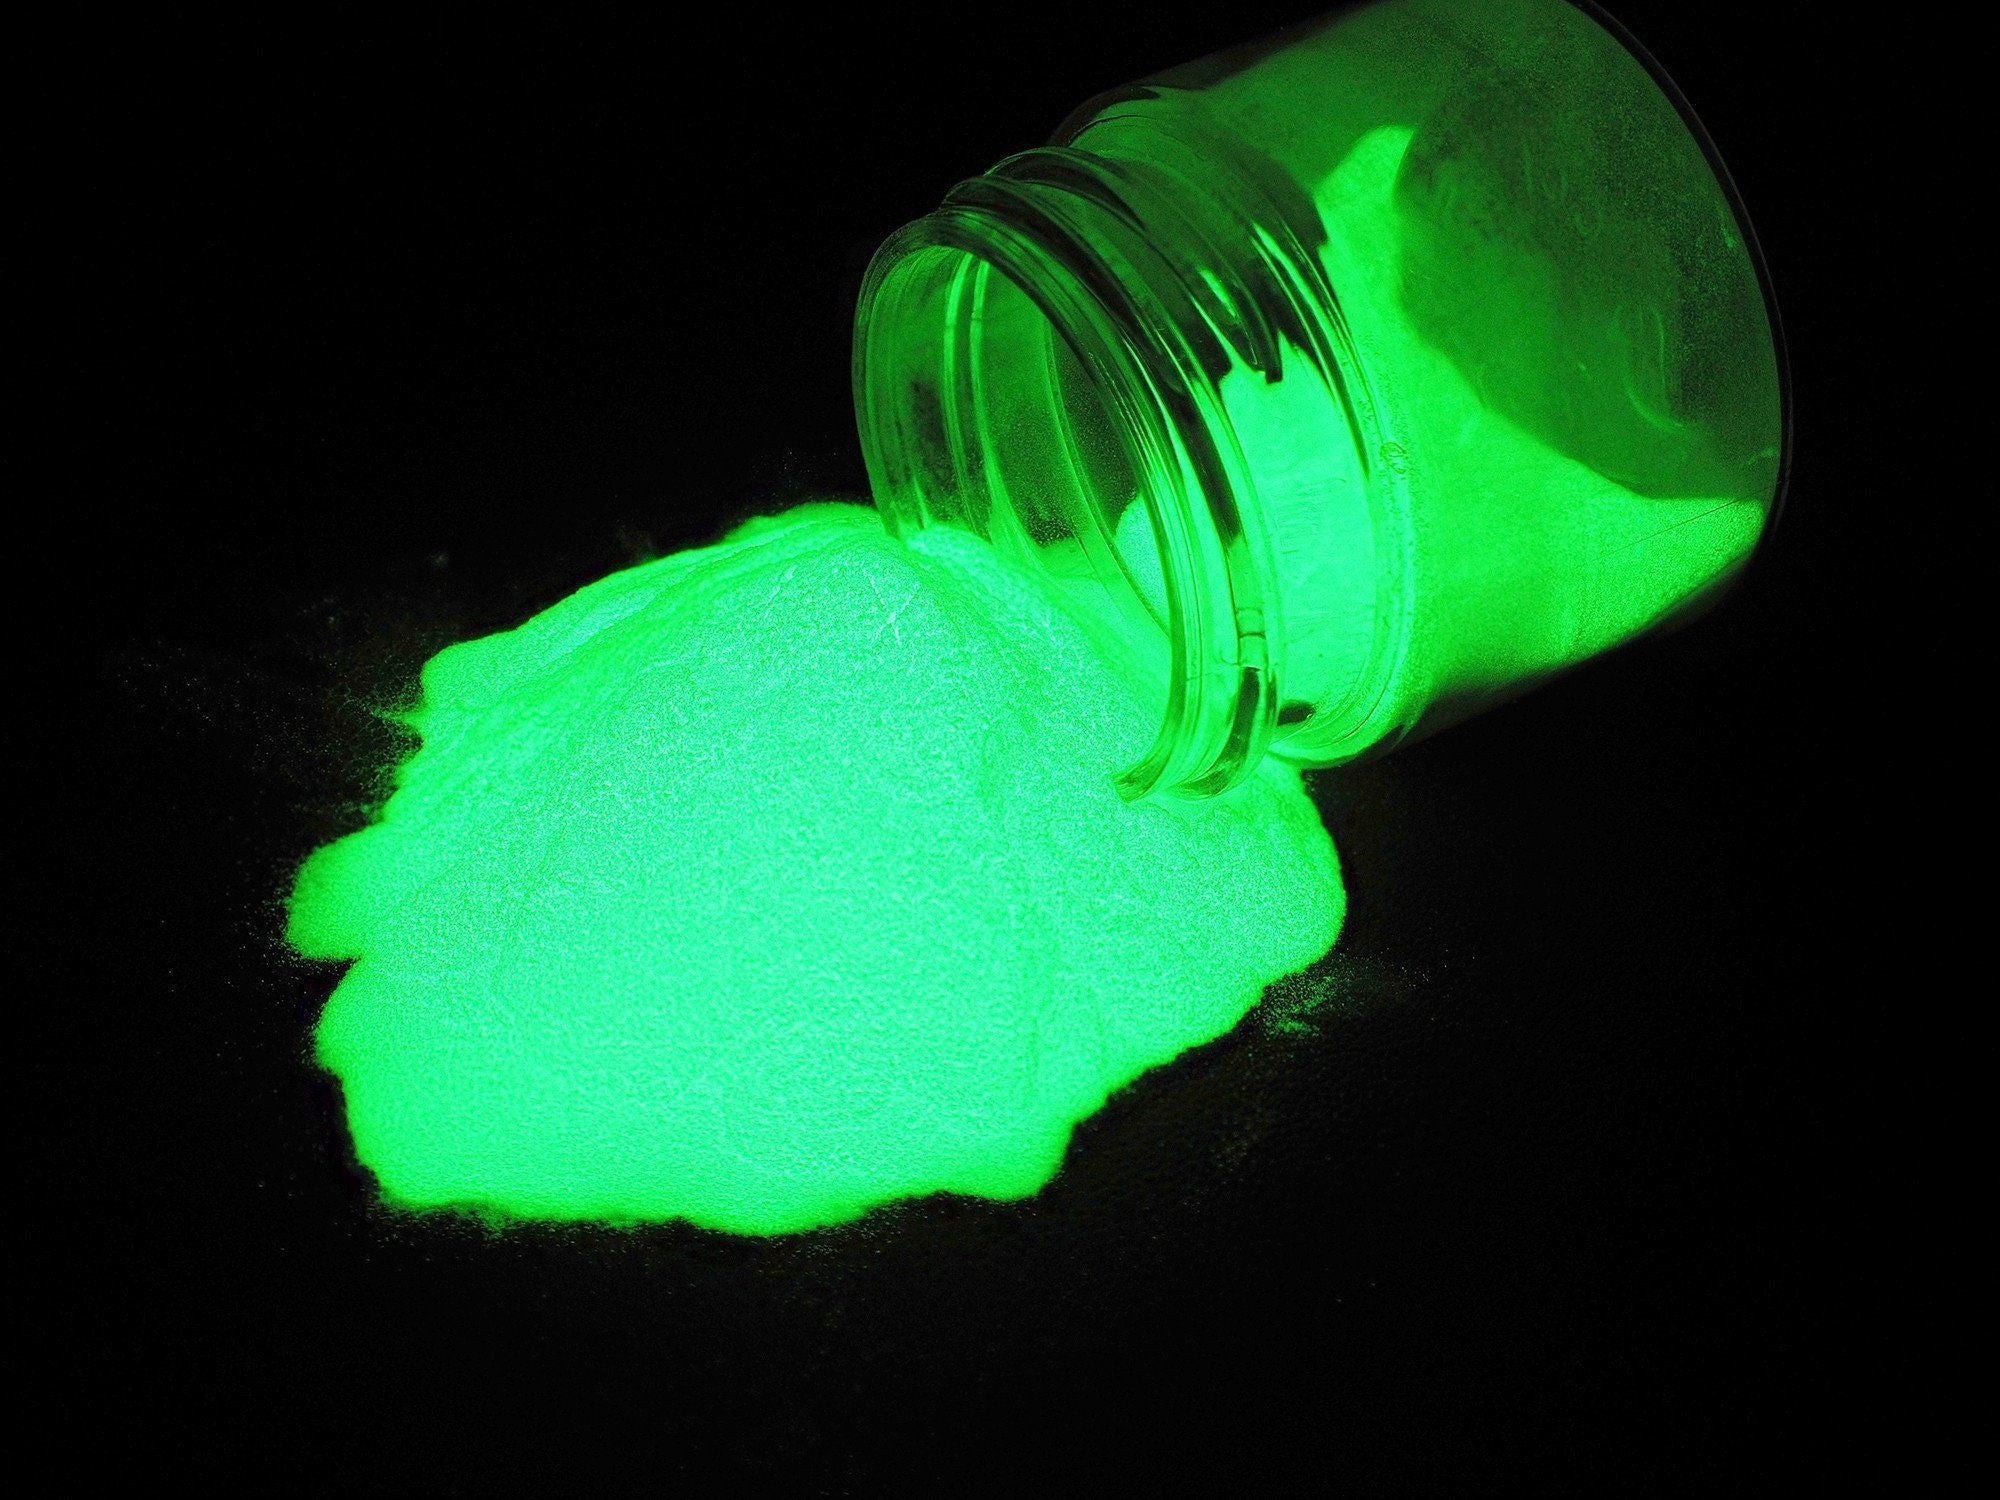 Green - Glow in the Dark Pigment – NorthWood Distributing